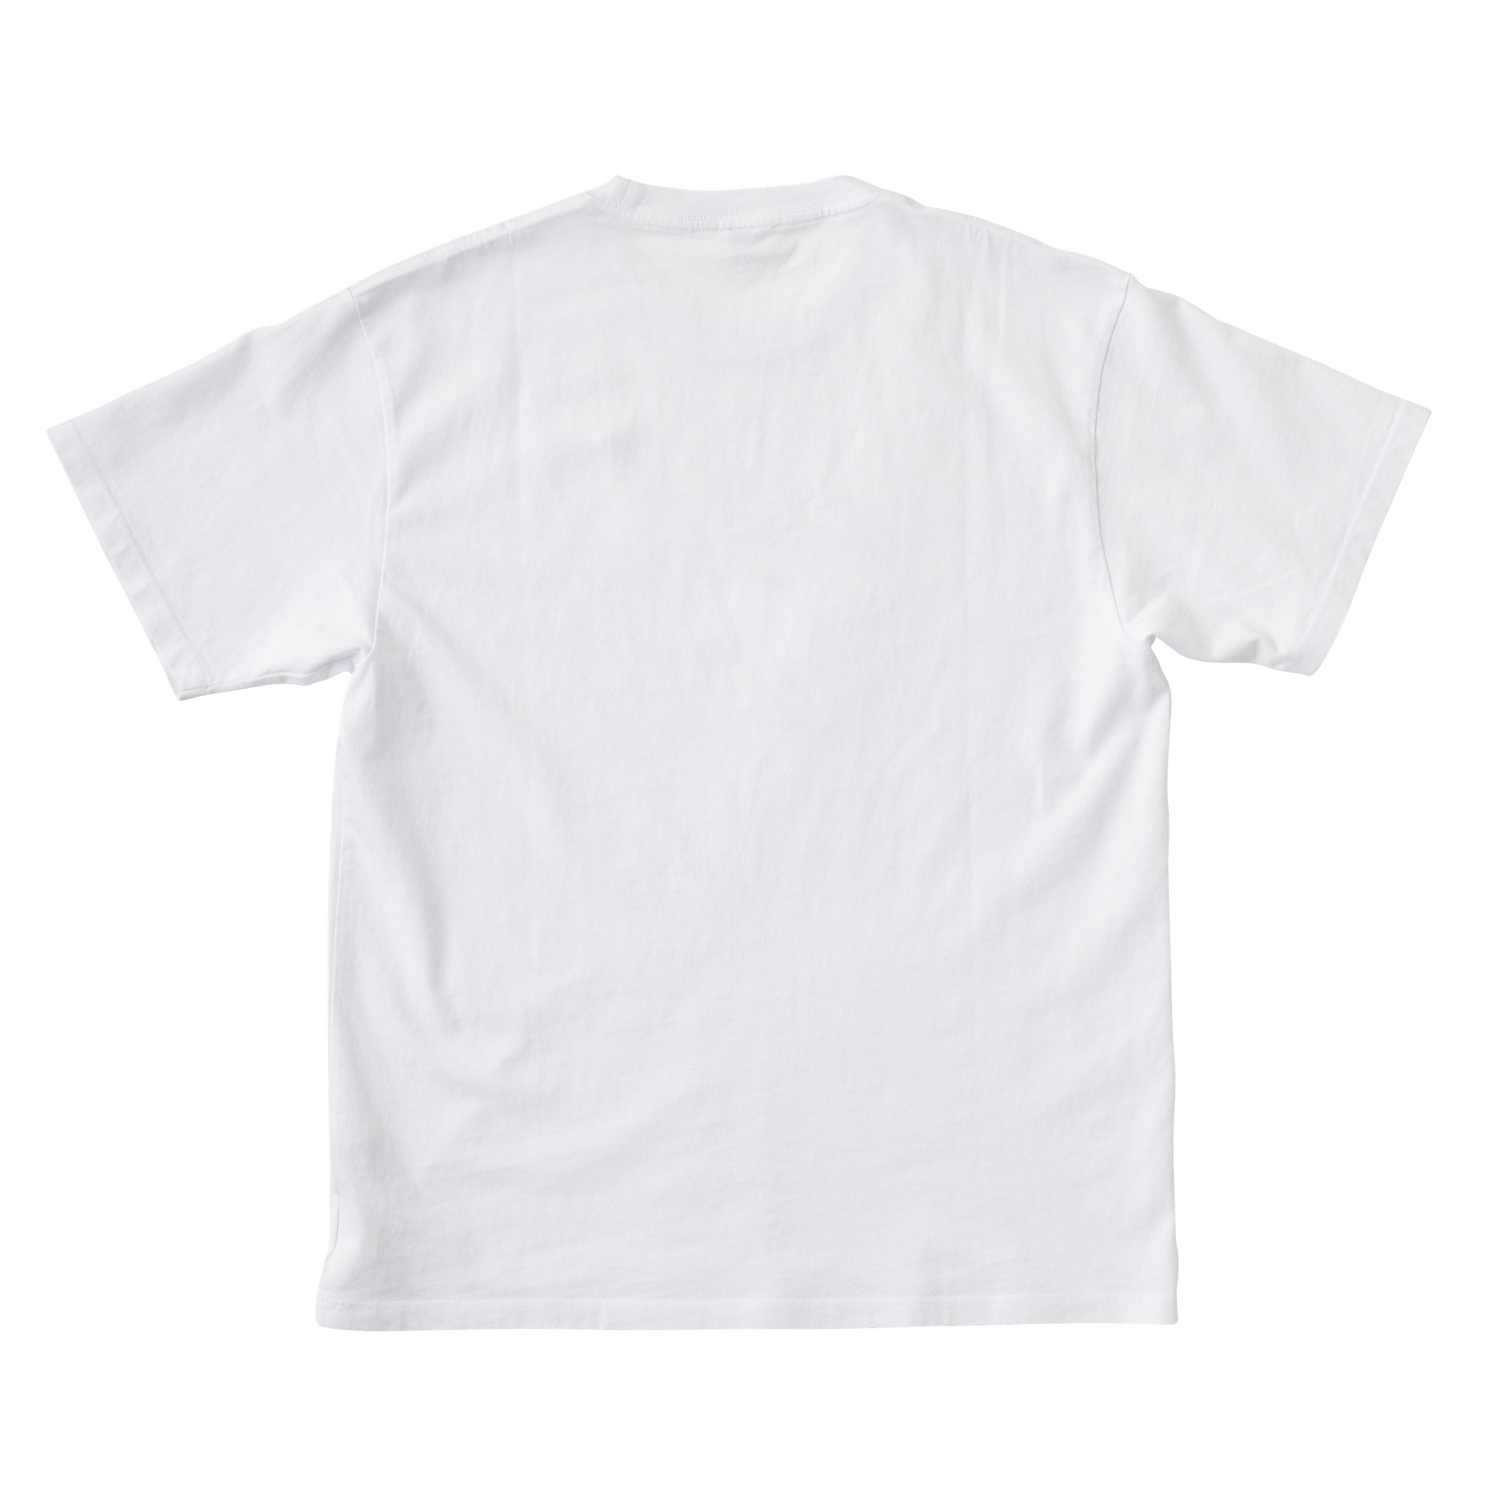 POPEYE Logo T-Shirt / Optic White